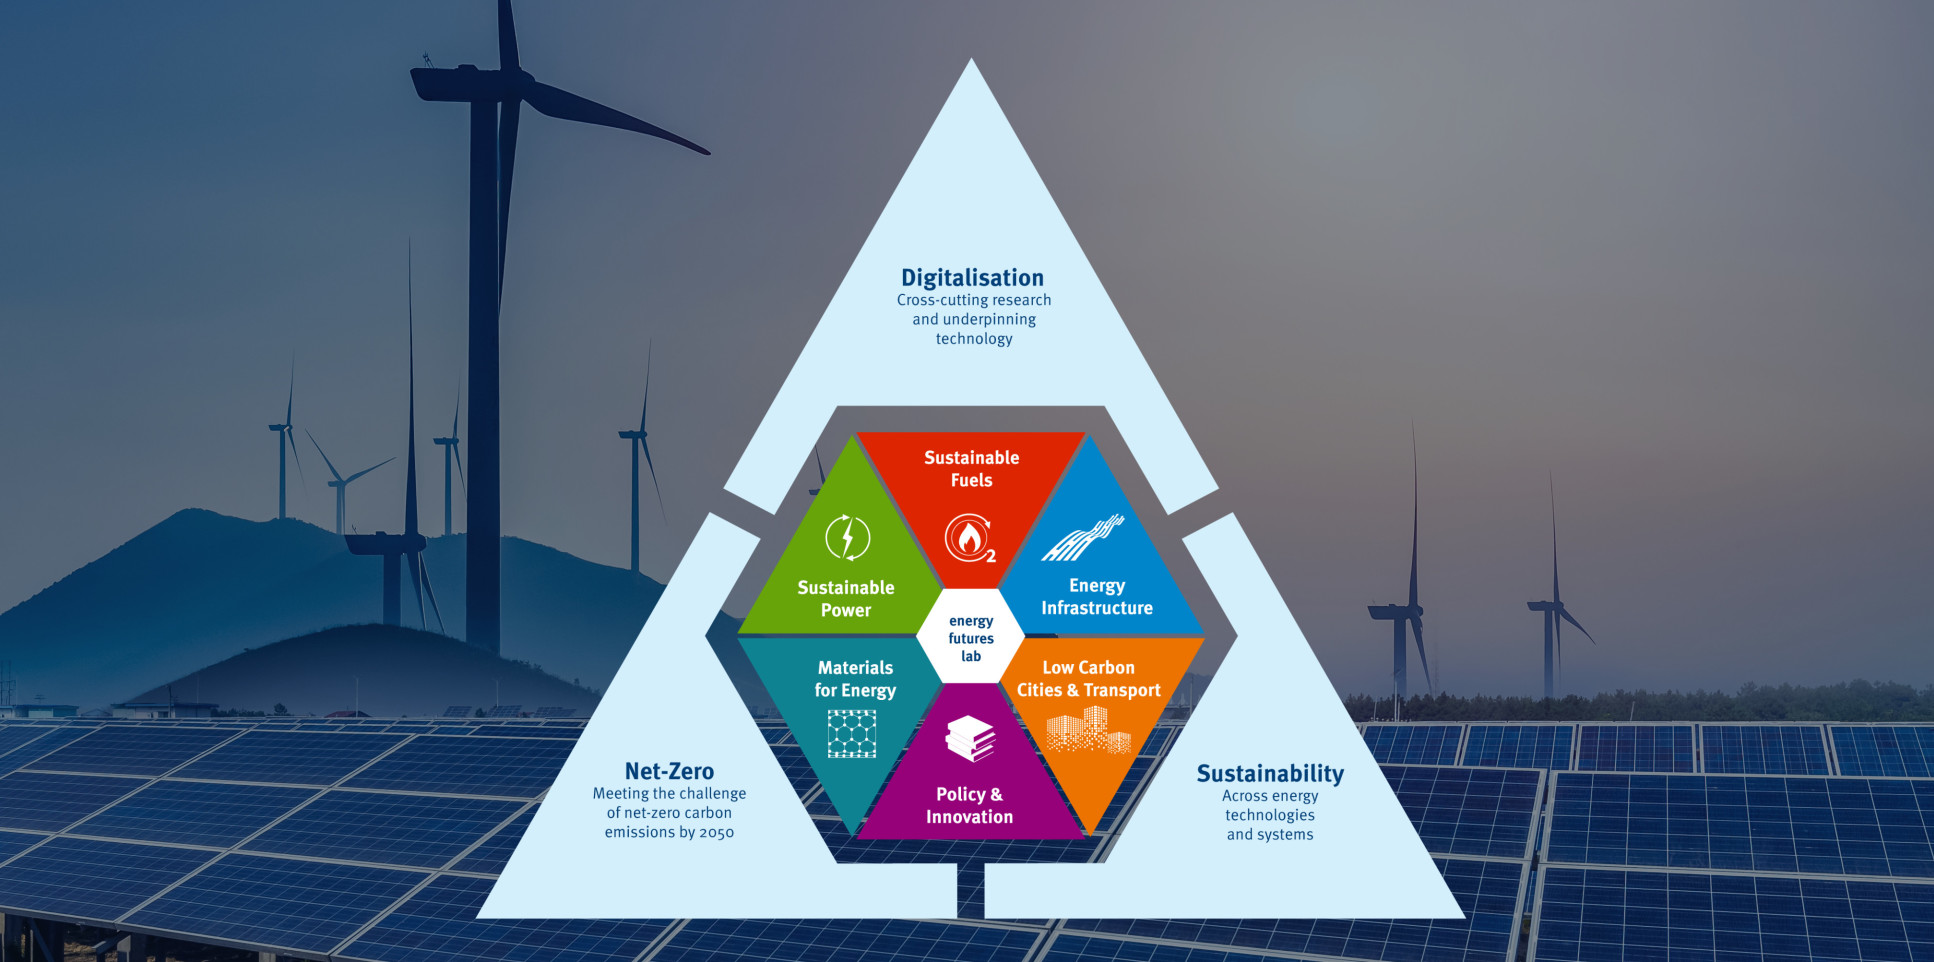 Triangle split into three showing digitalisation, net zero and sustainability